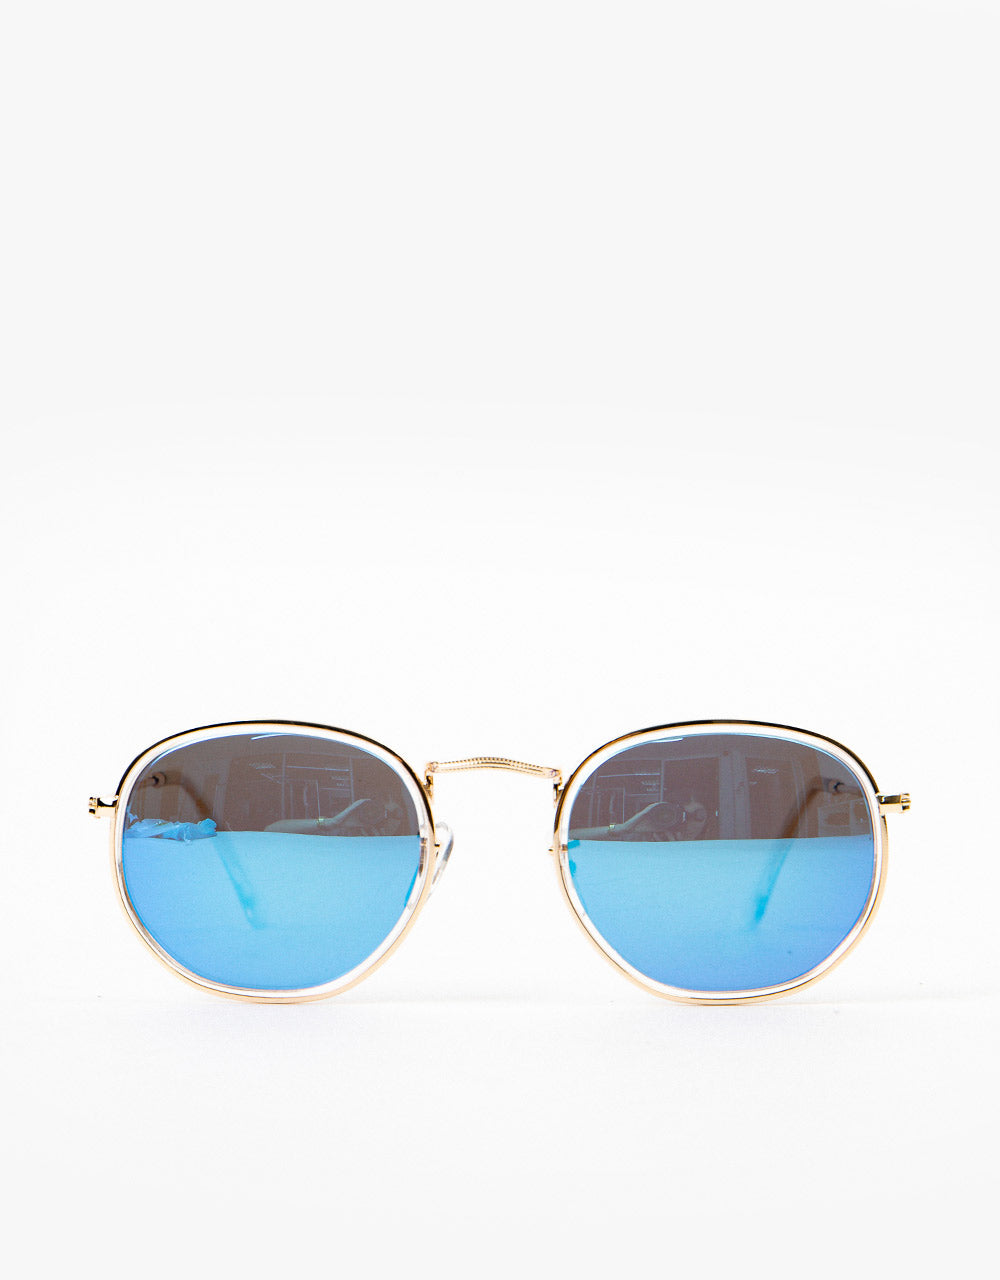 Suncloud Zephyr - Topline Eyewear | OFFICIAL RETAILER